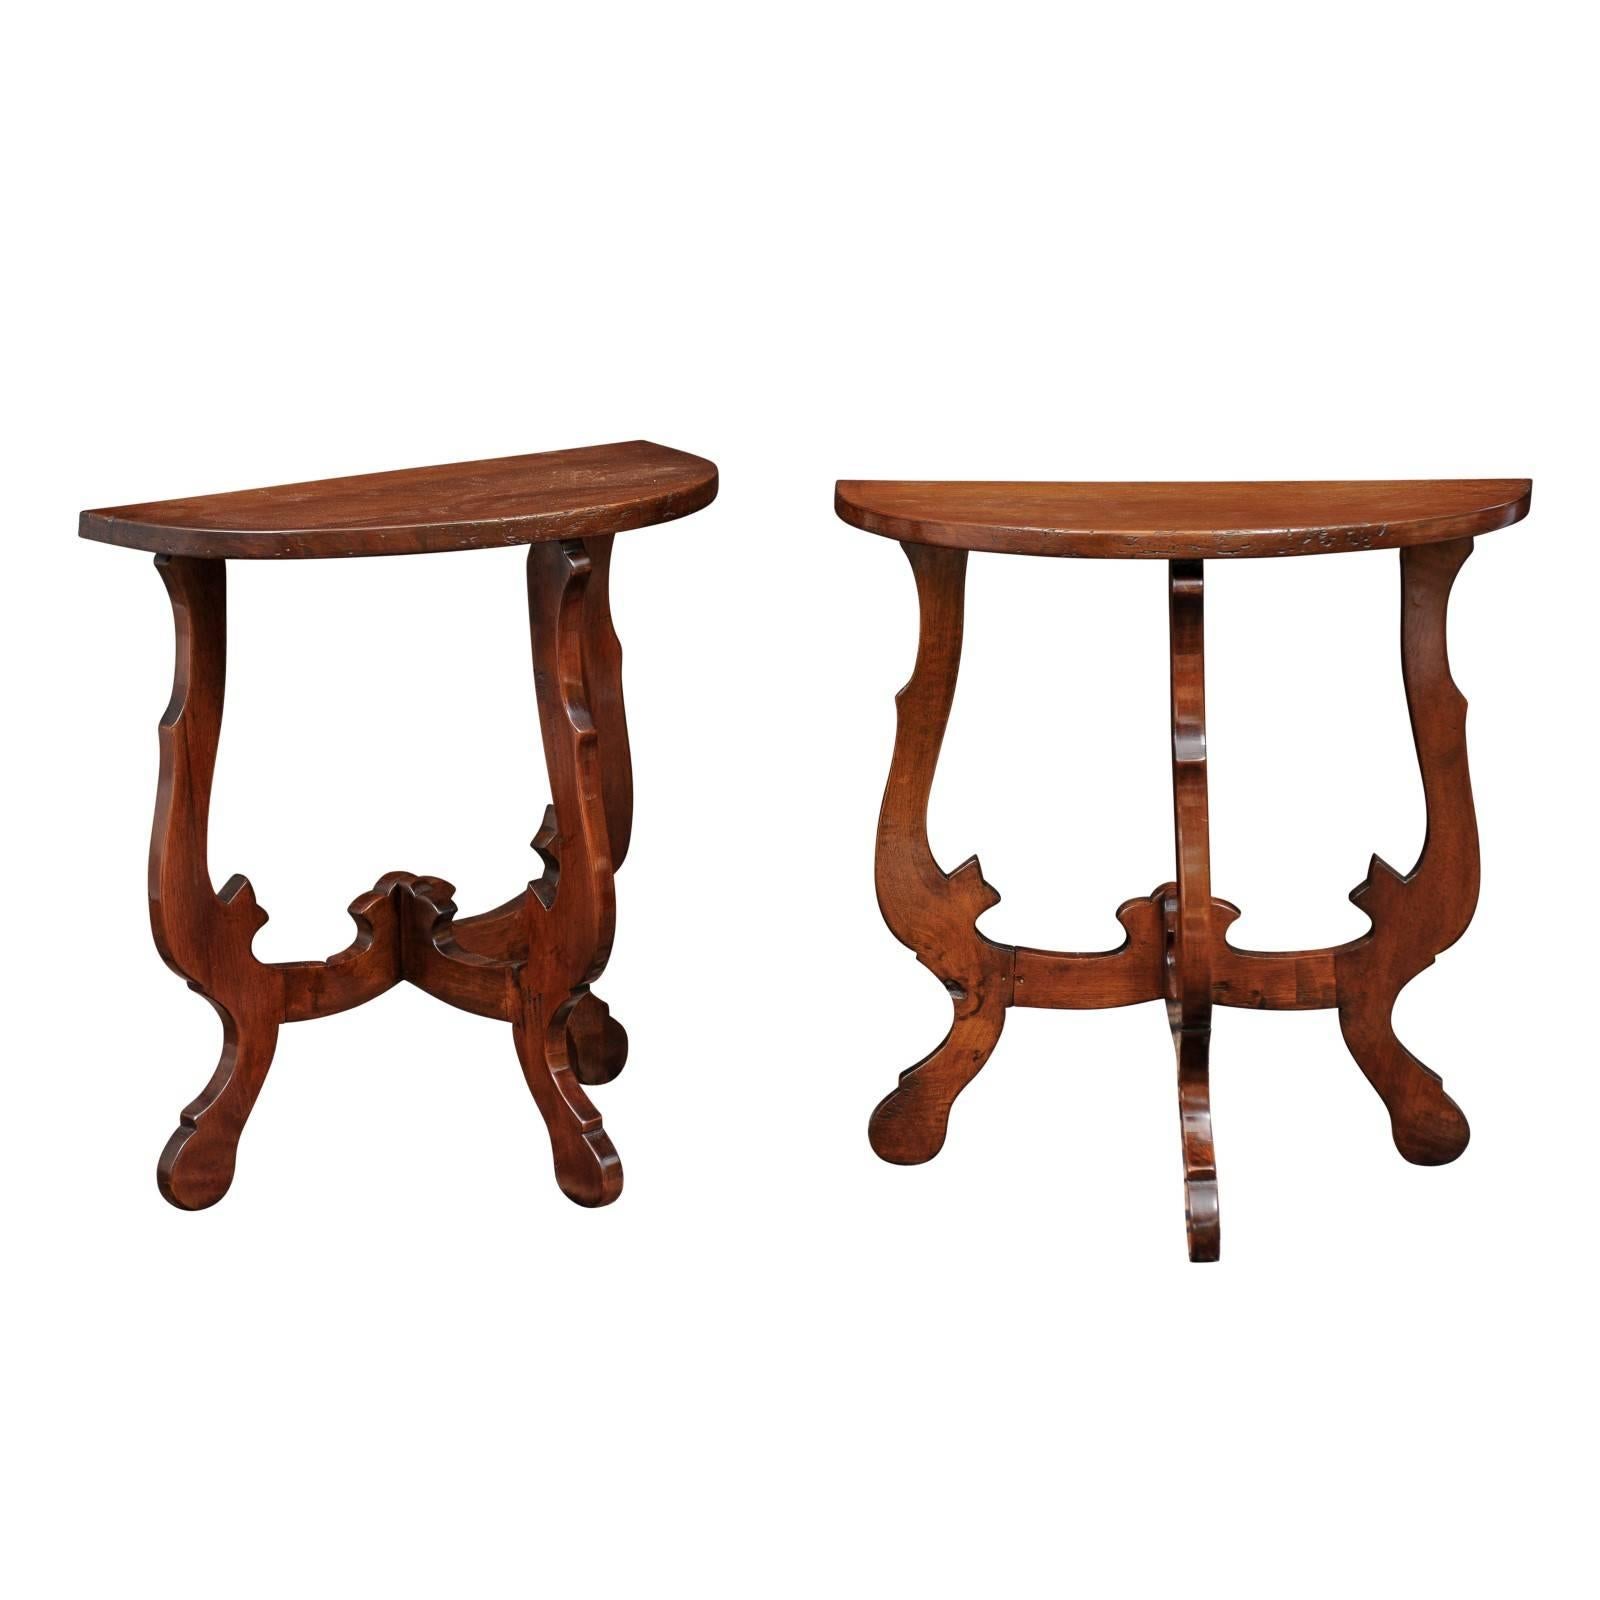 Pair of Petite Italian Baroque Style Demilune Tables with Lyre Legs, circa 1870